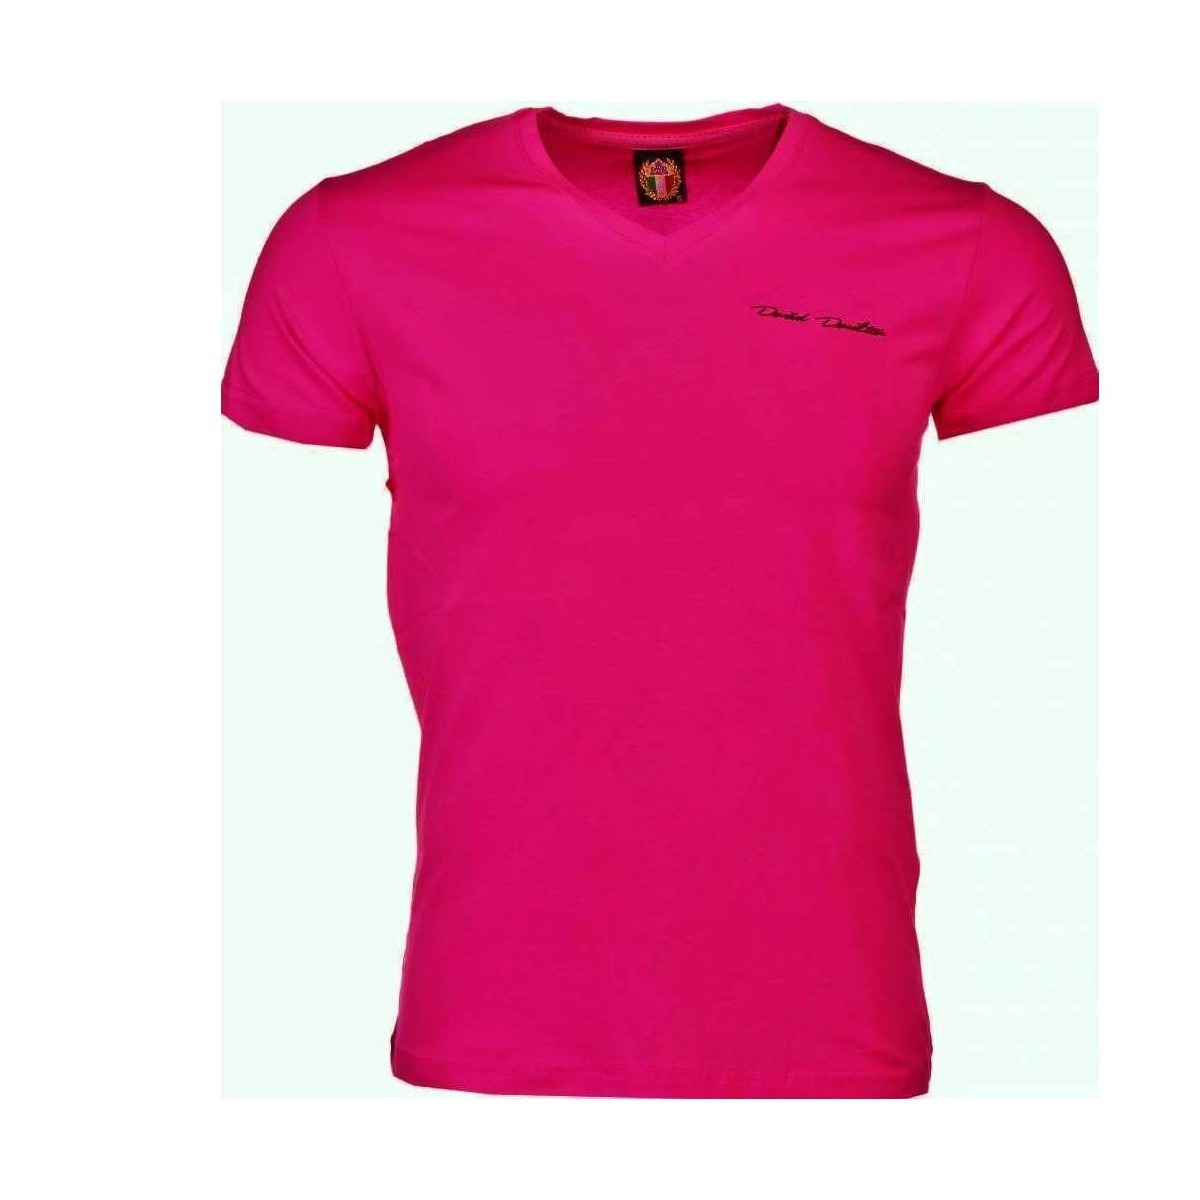 David Copper Gents T-Shirt in Pink at Spartoo GOOFASH